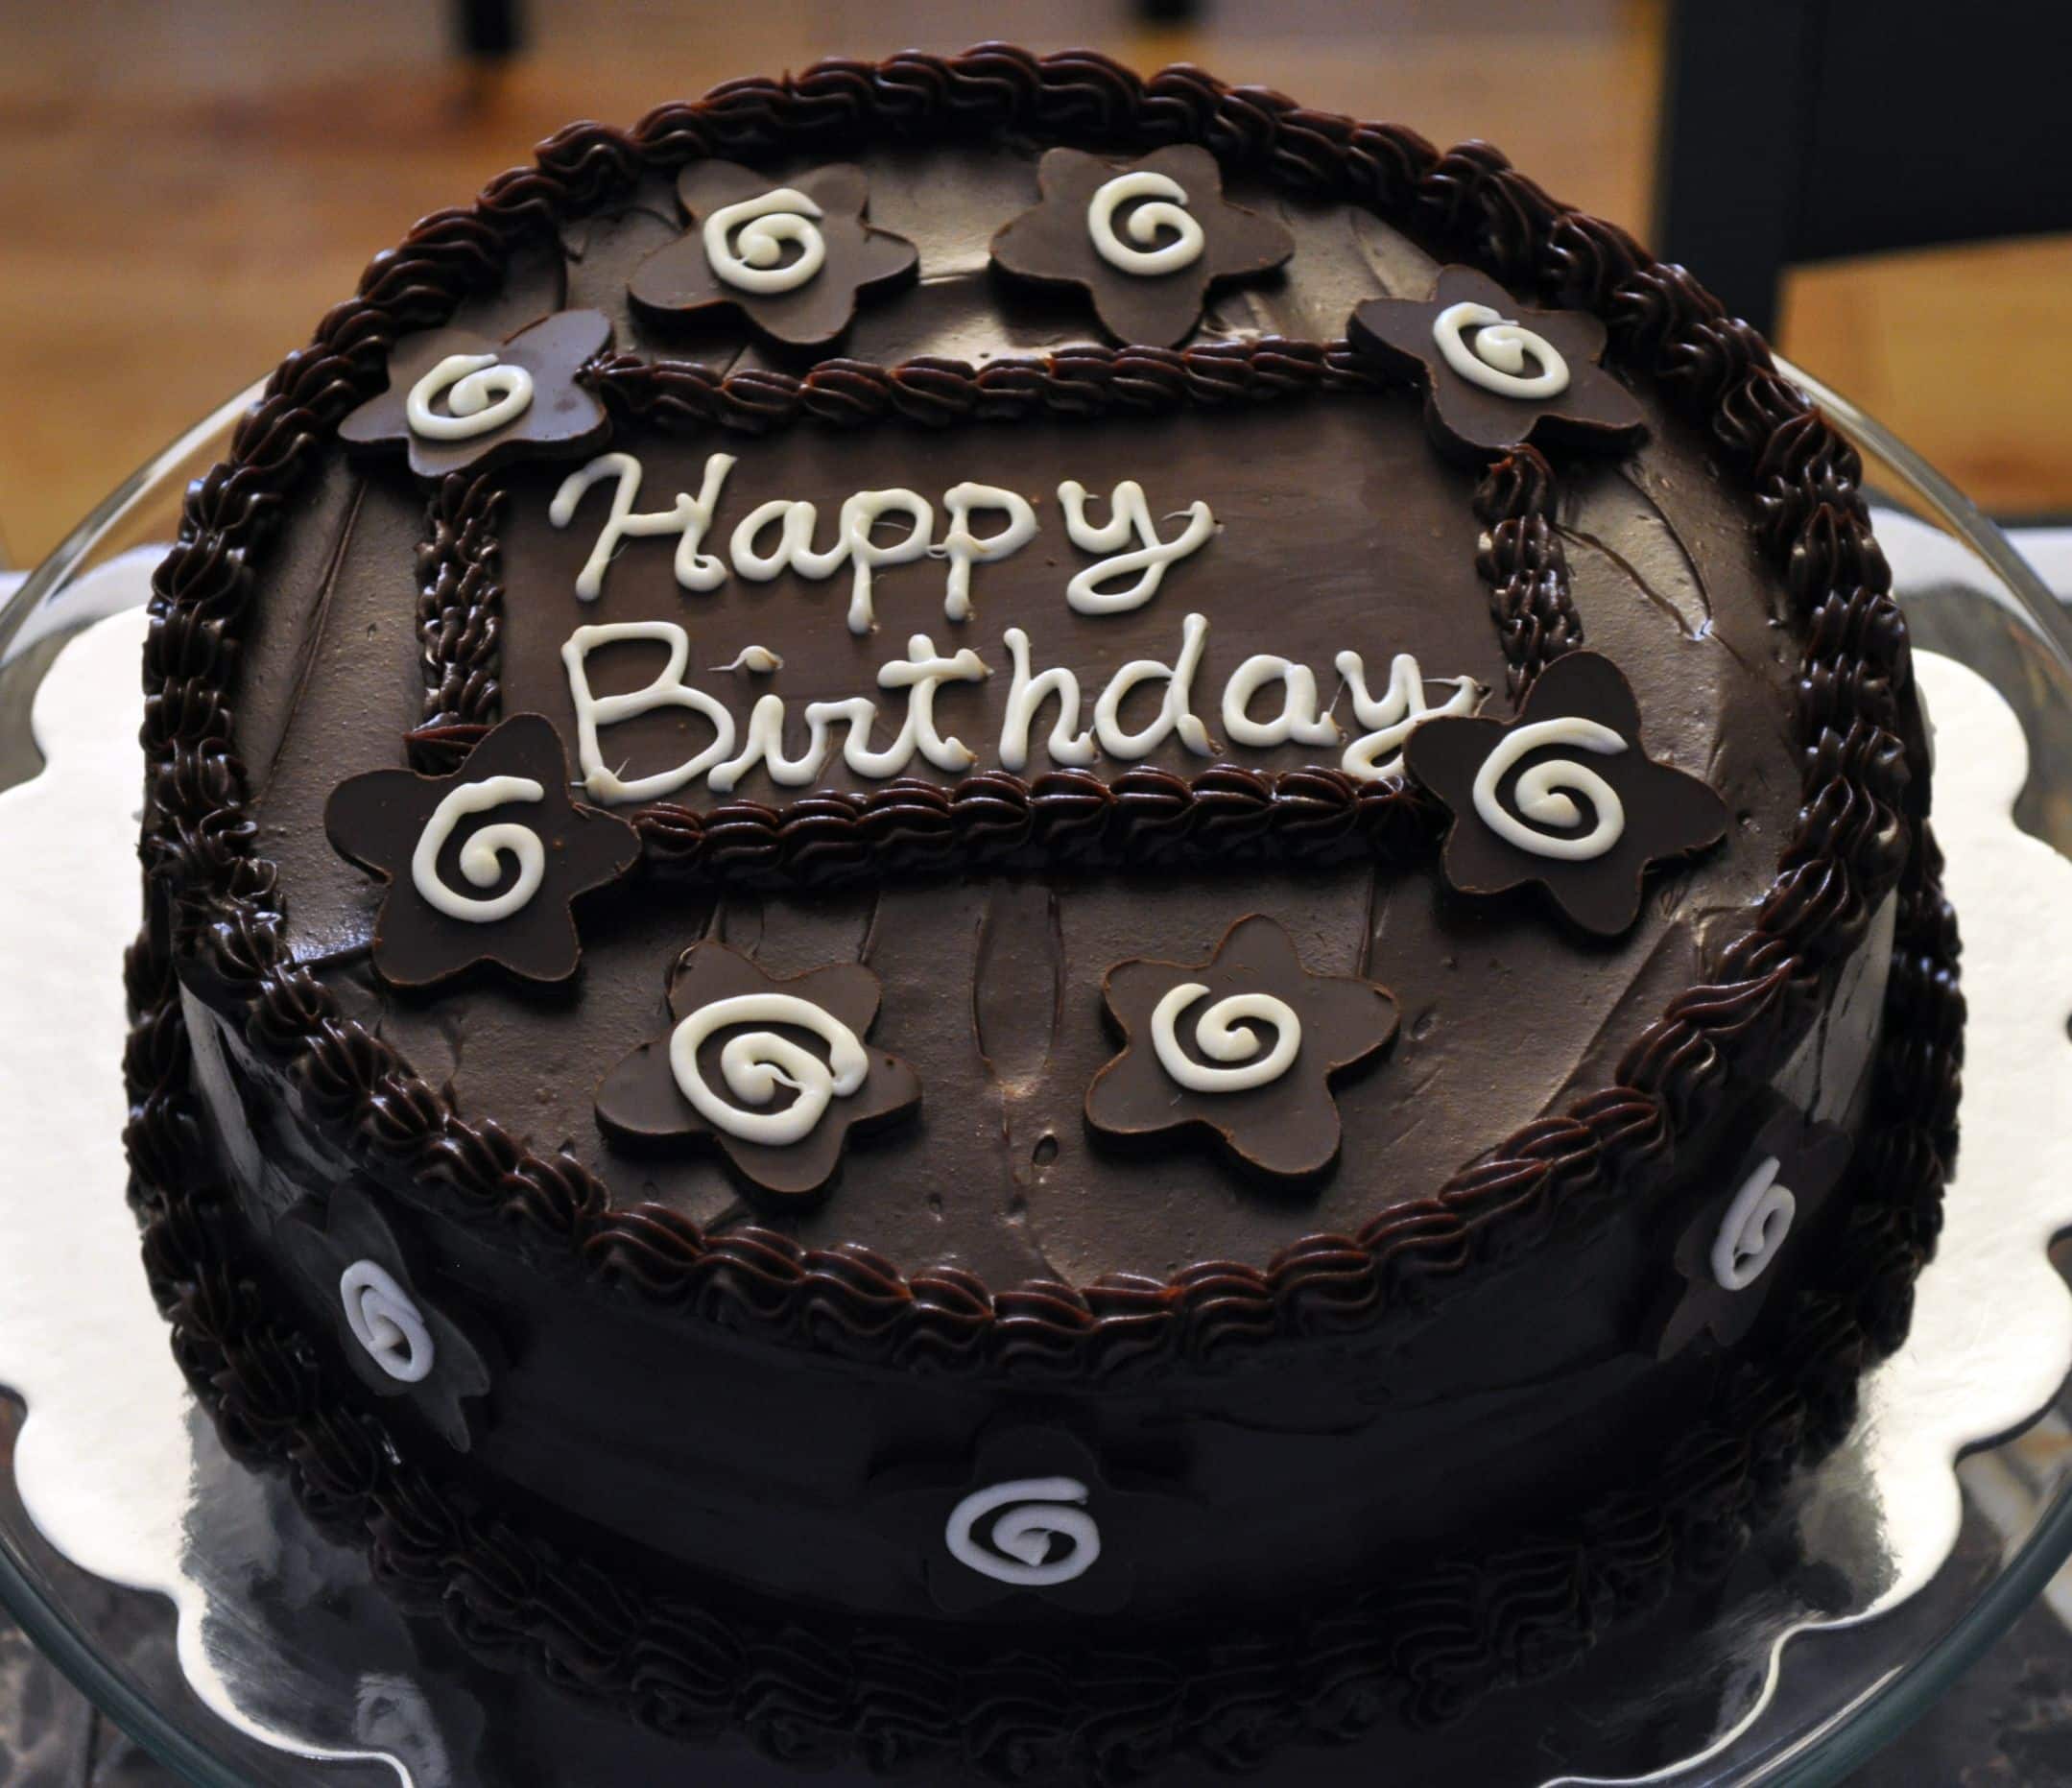 Details more than 126 birthday cake sumit best